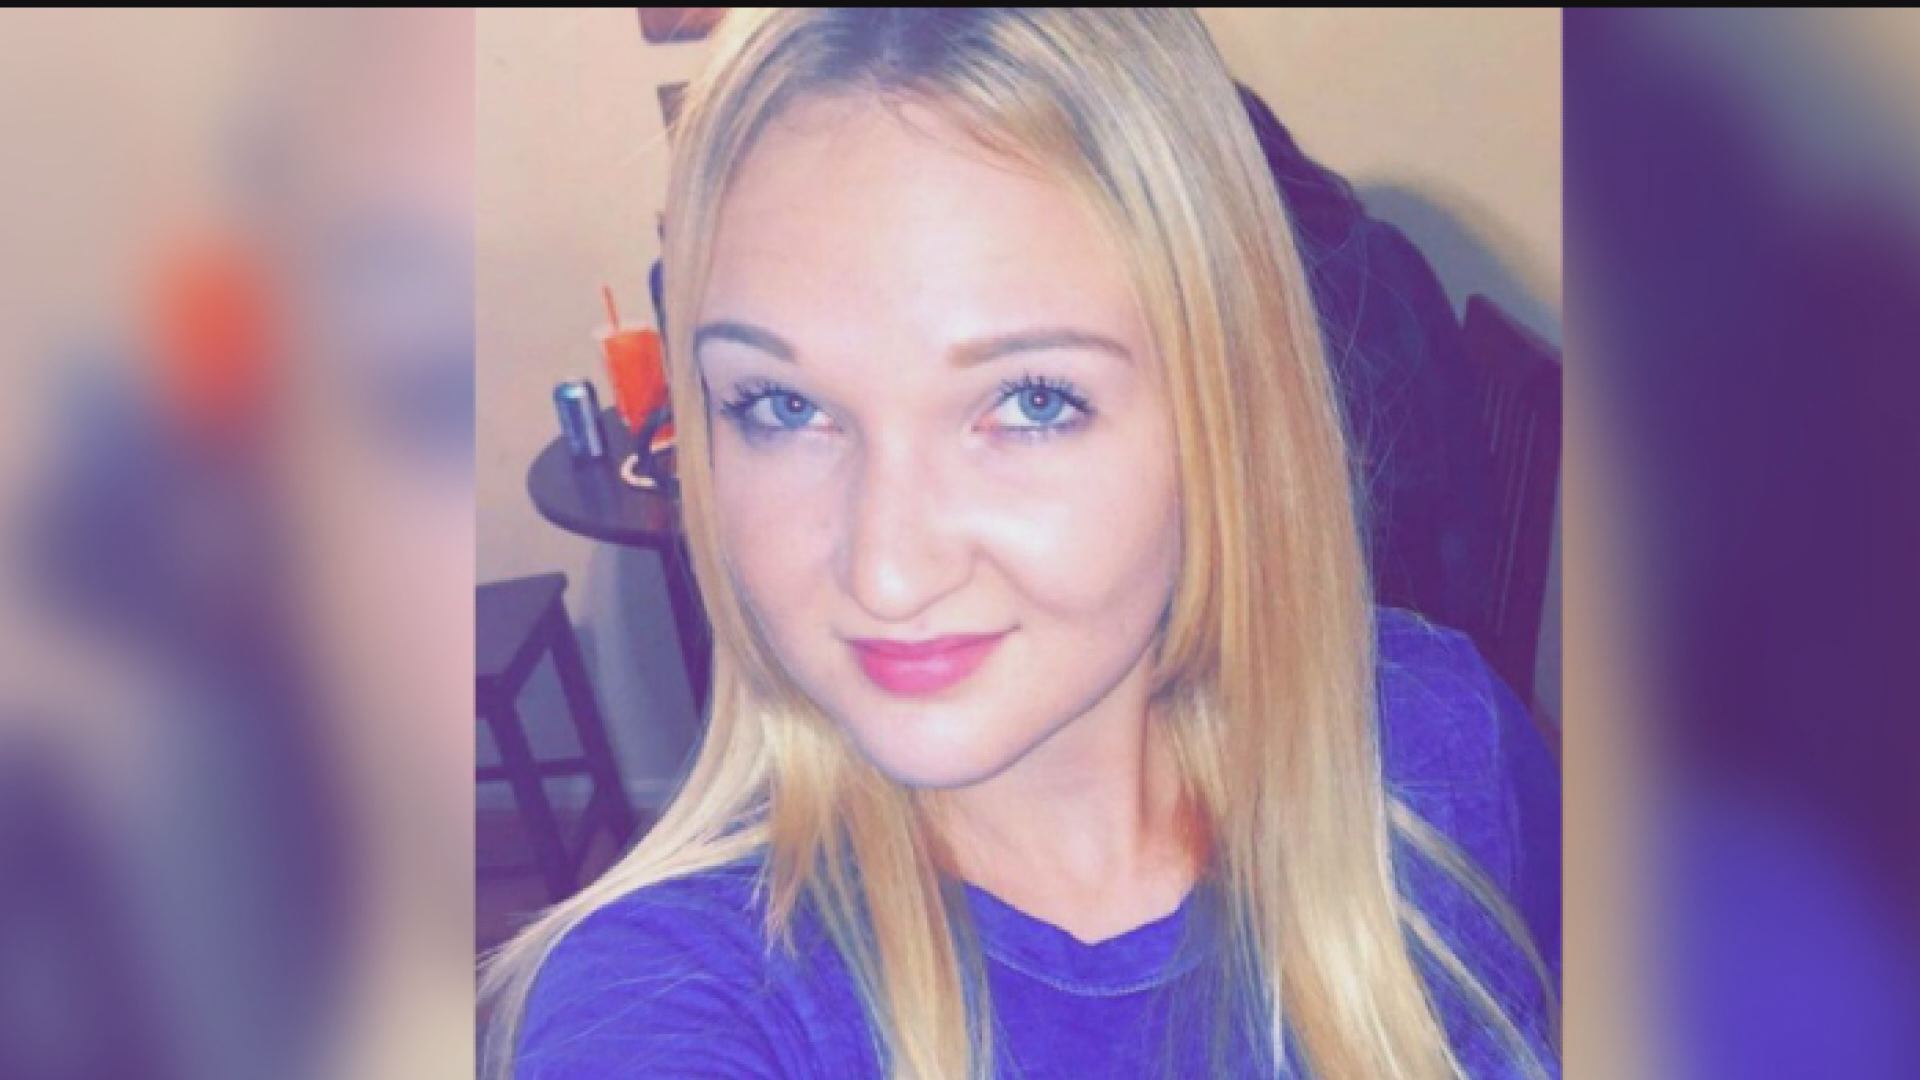 21-year-old Va. woman found dead inside car | wusa9.com